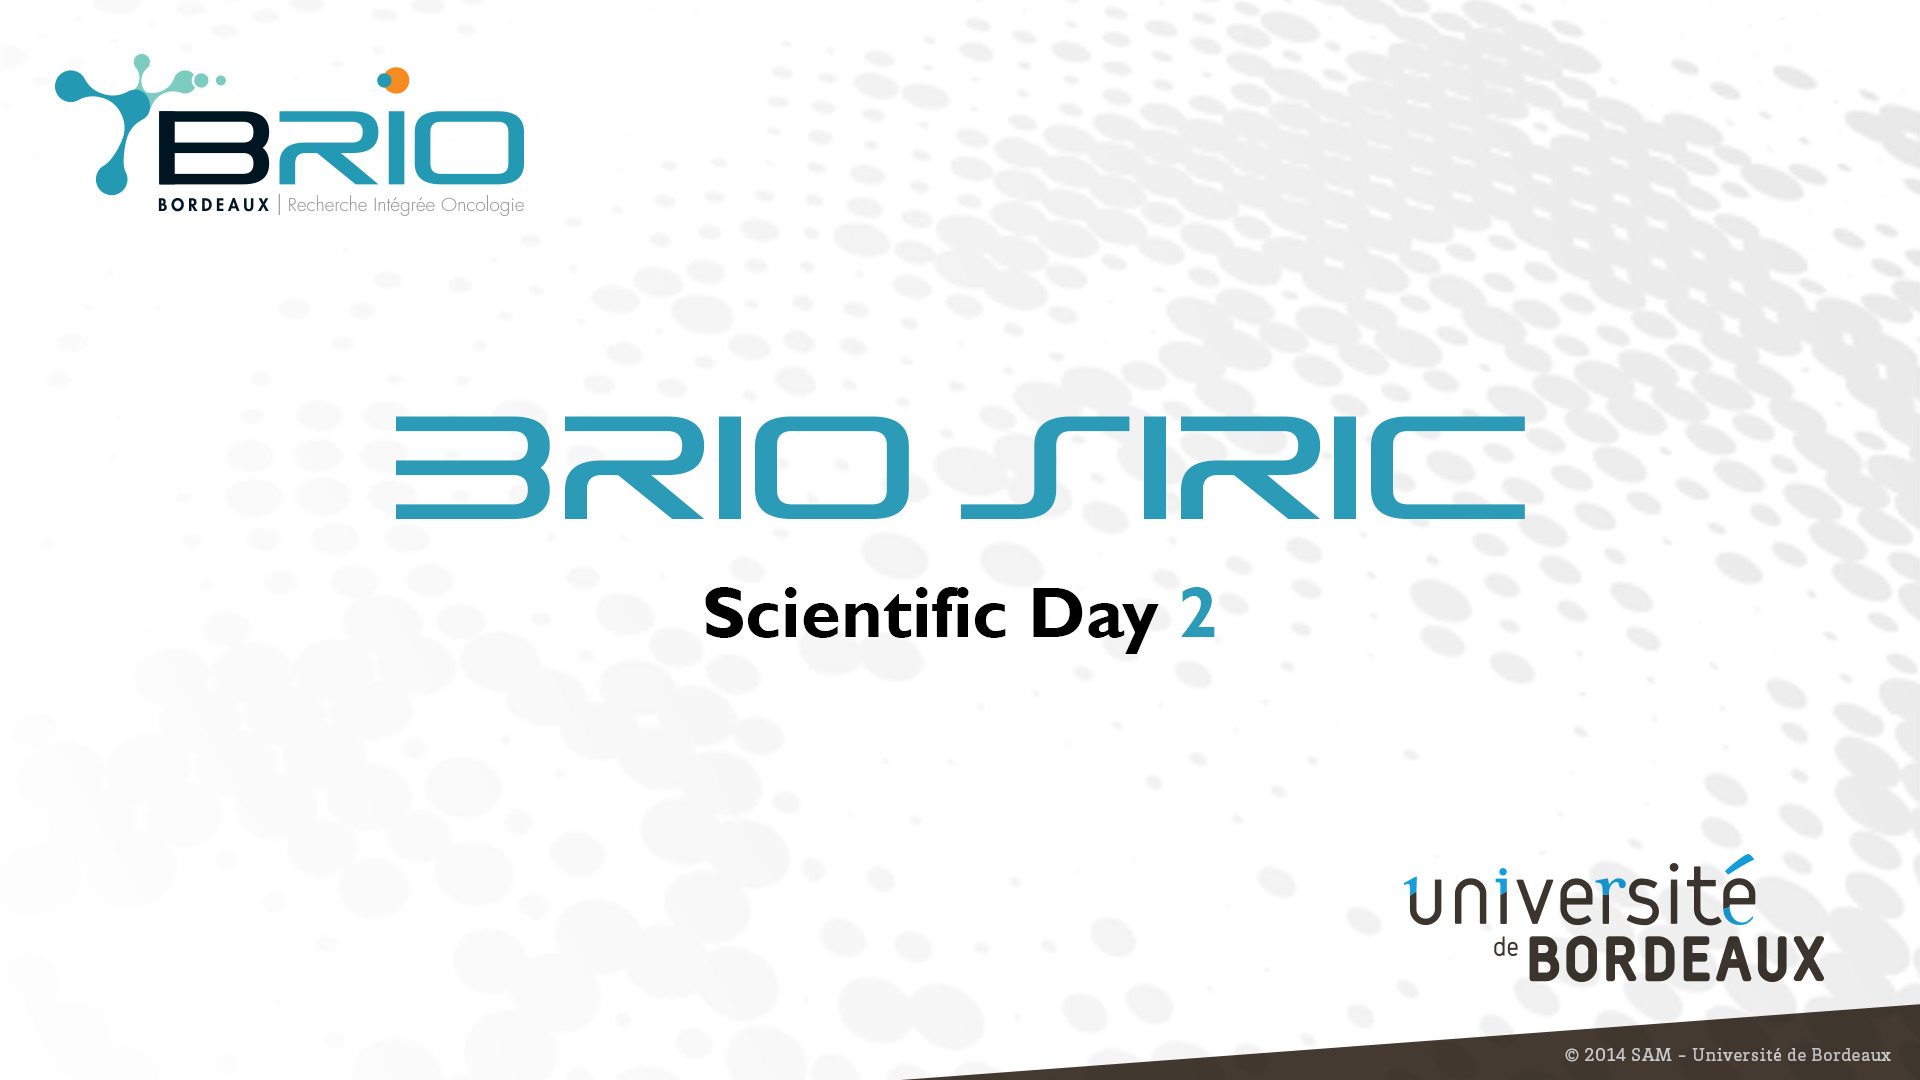 BRIO support to scientists